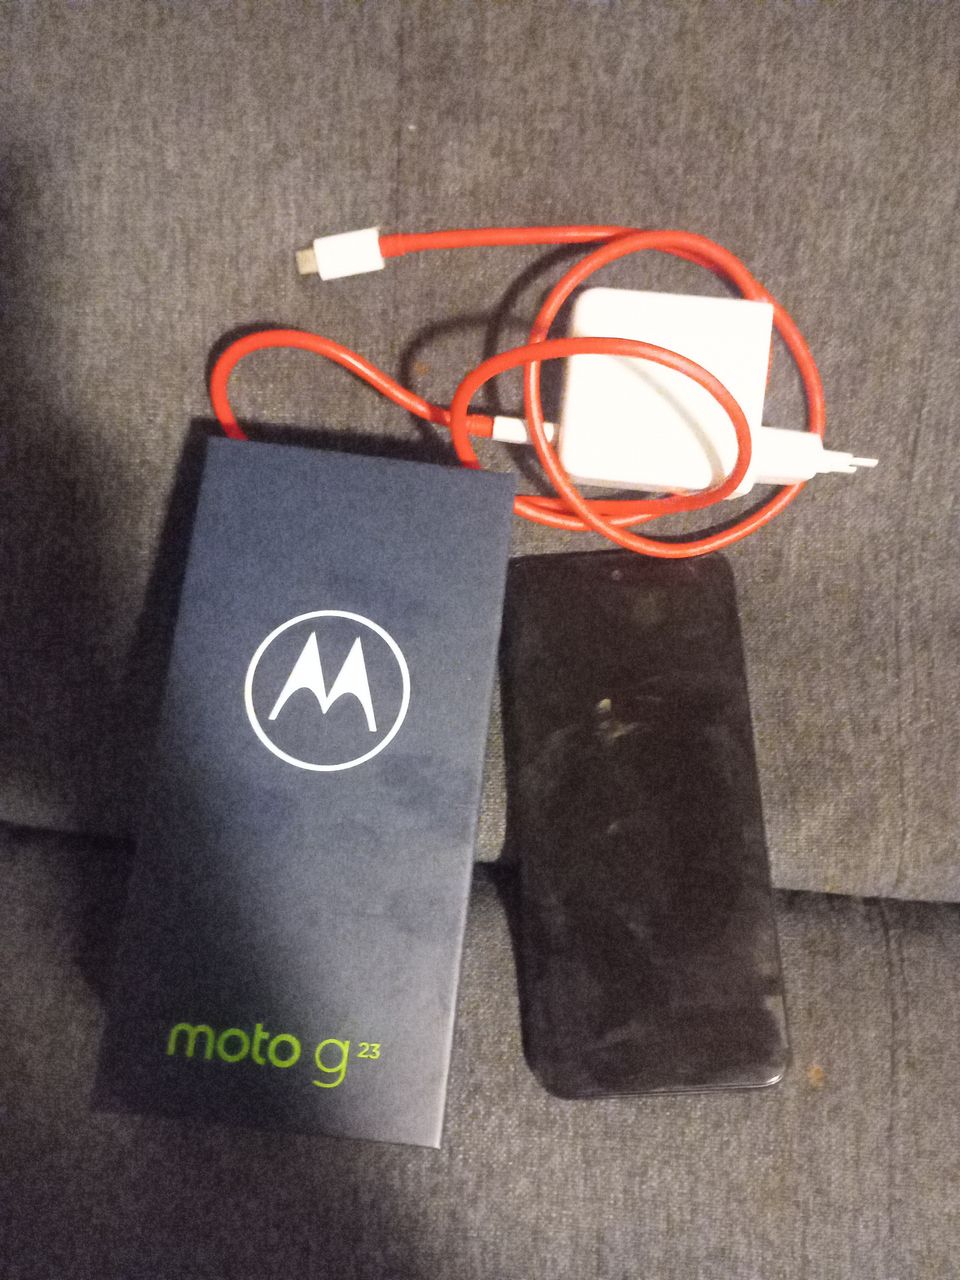 Motorola moto g23